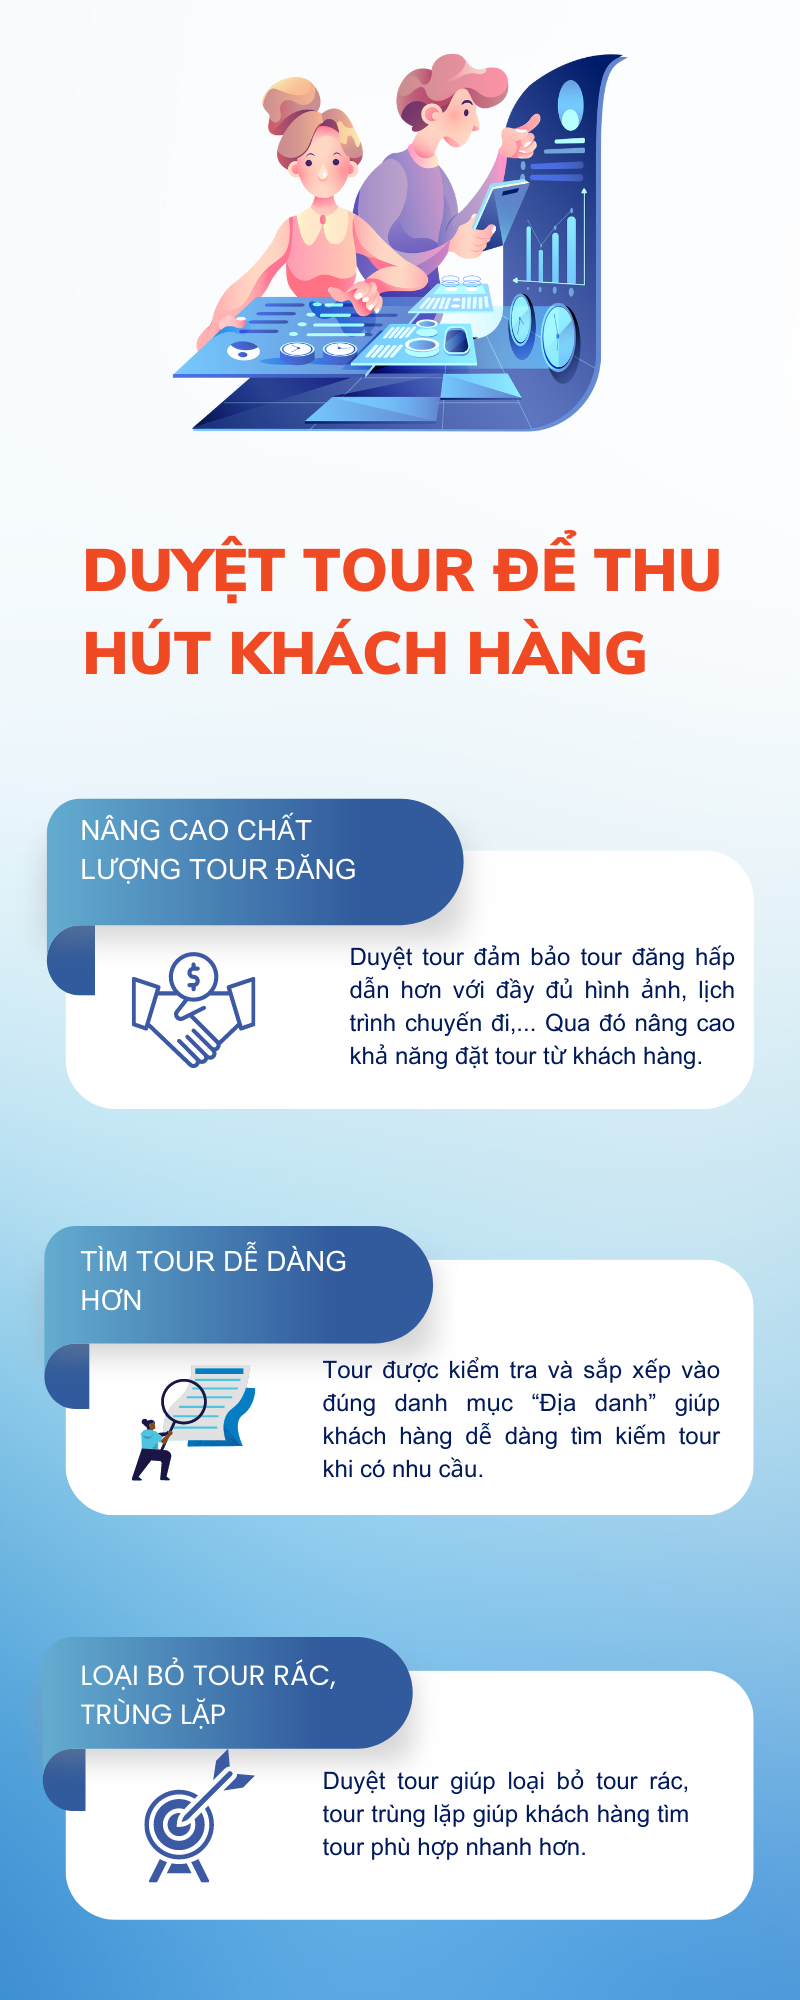 tour-dang-phai-duoc-duyet-de-thu-hut-khach-hang